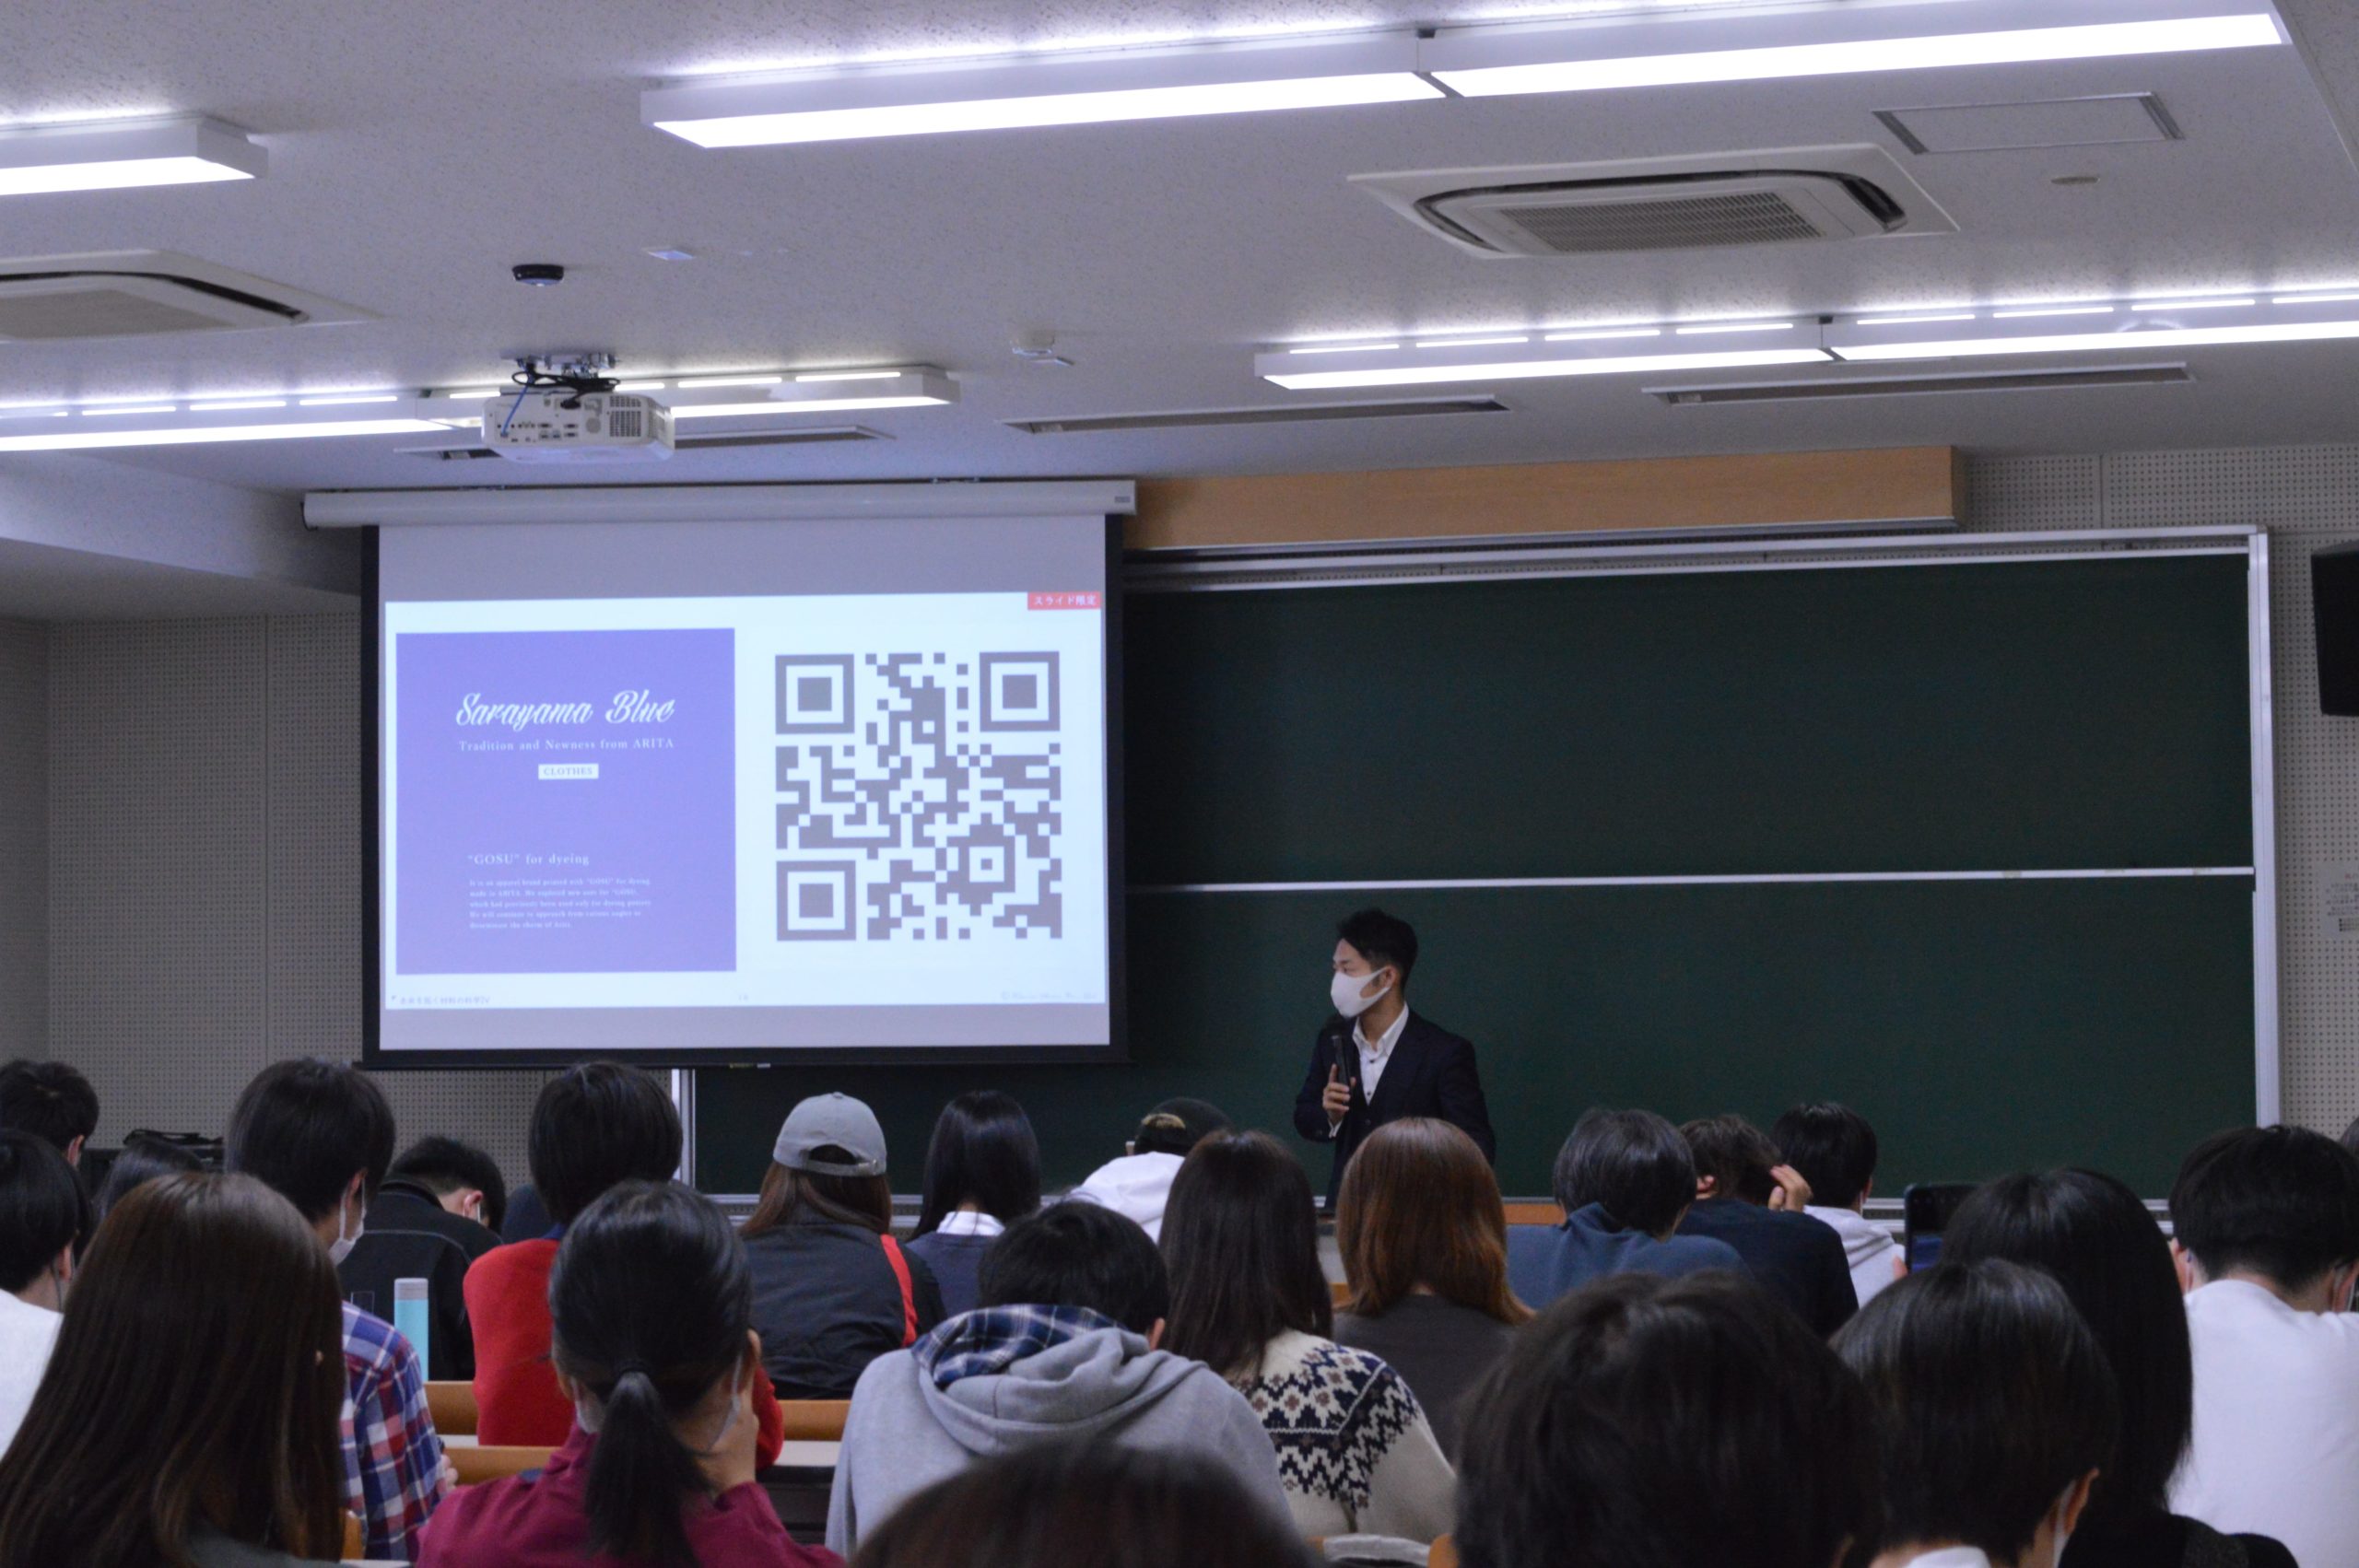 Saga university lecture